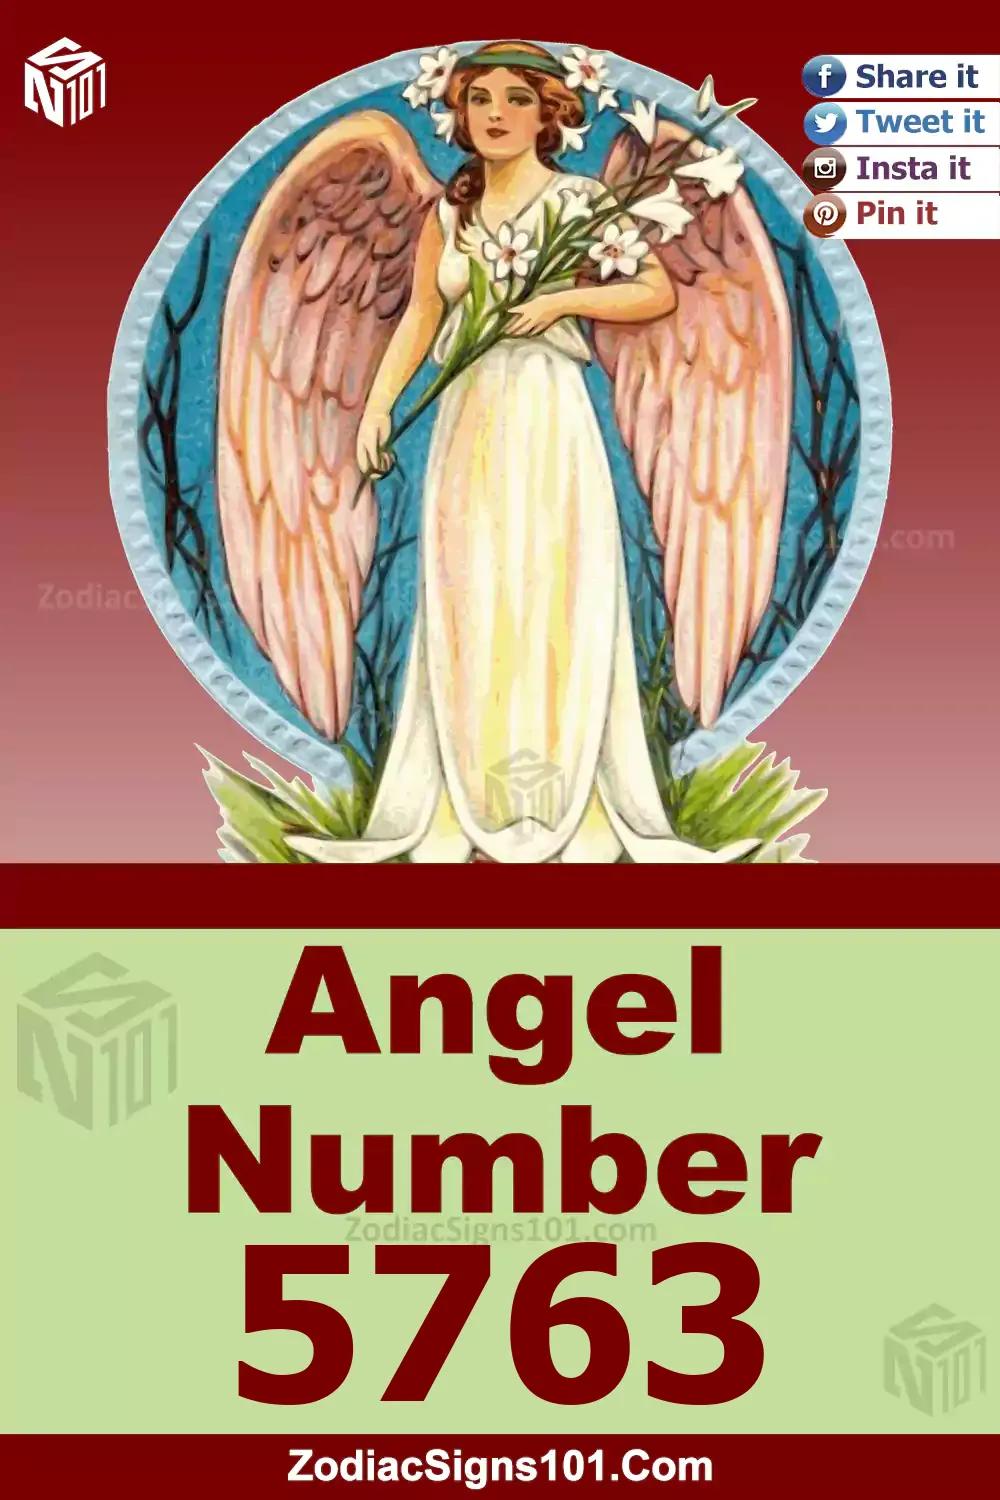 5763-Angel-Number-Meaning.jpg